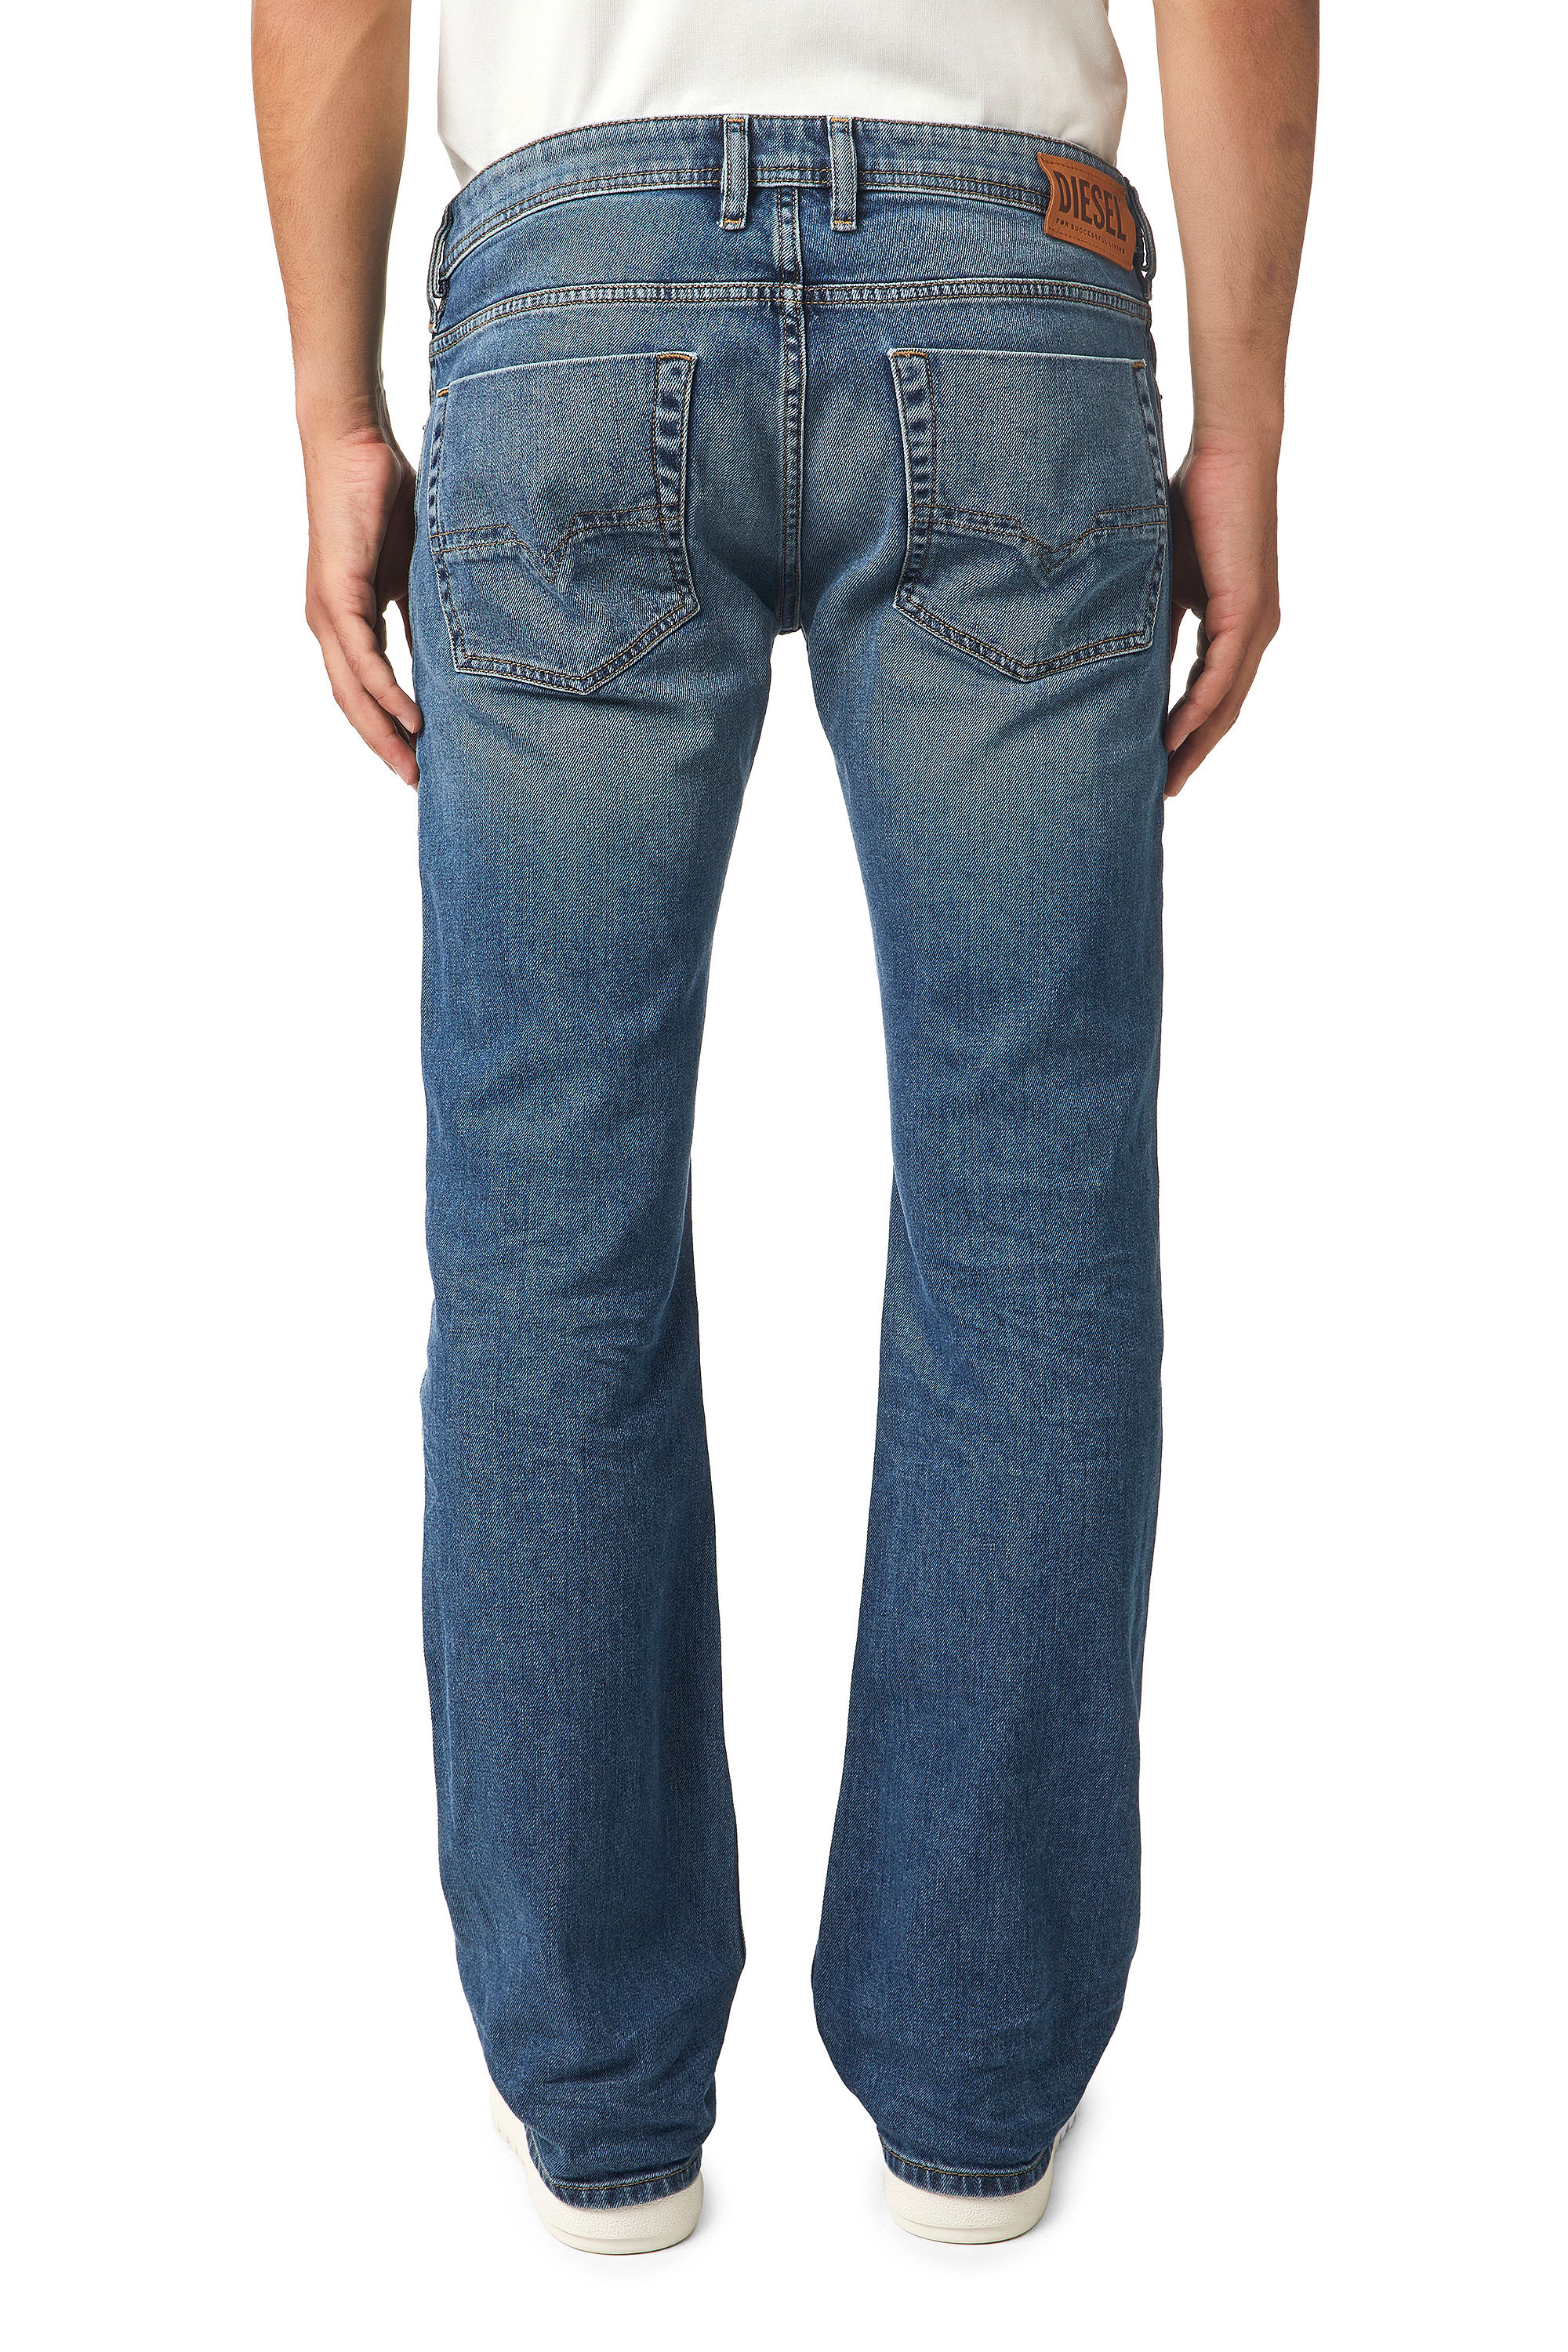 Diesel - Zatiny 009EI Bootcut Jeans,  - Image 3